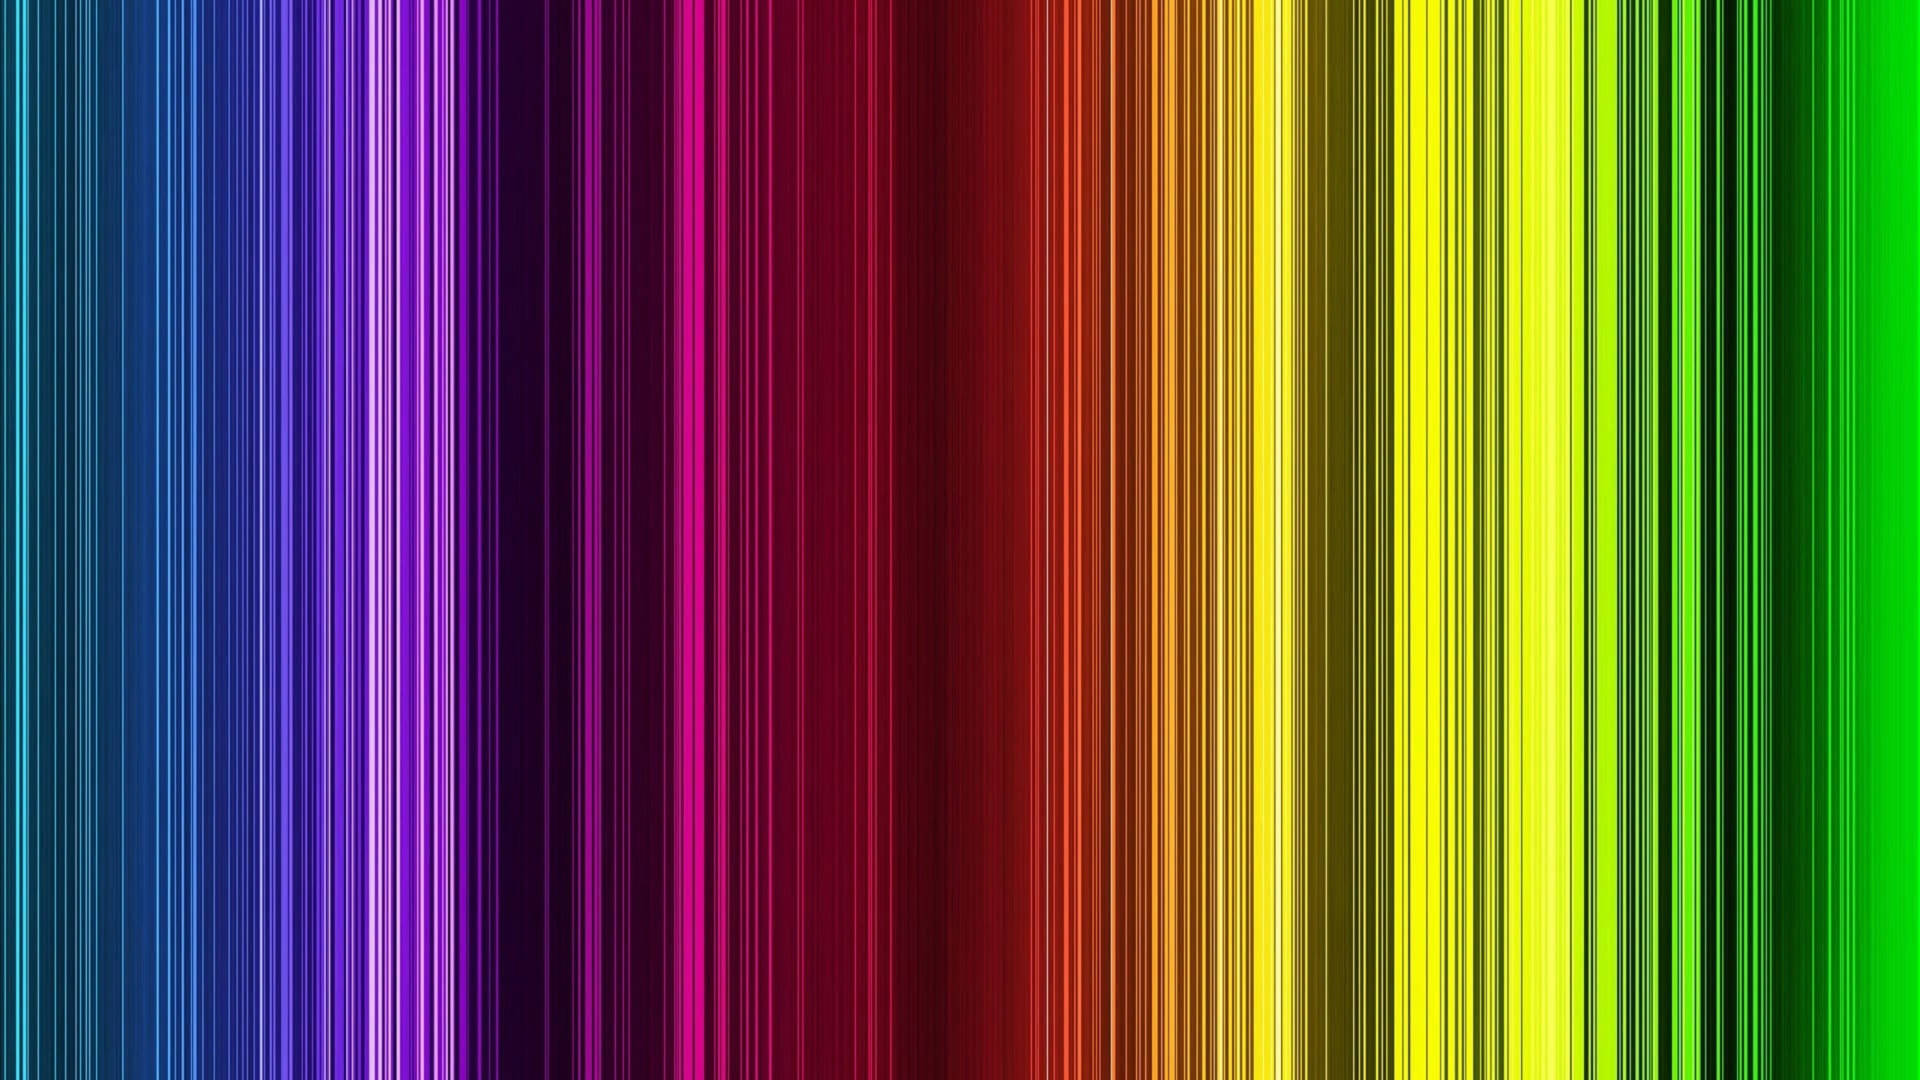 Spectrum Wallpaper Images